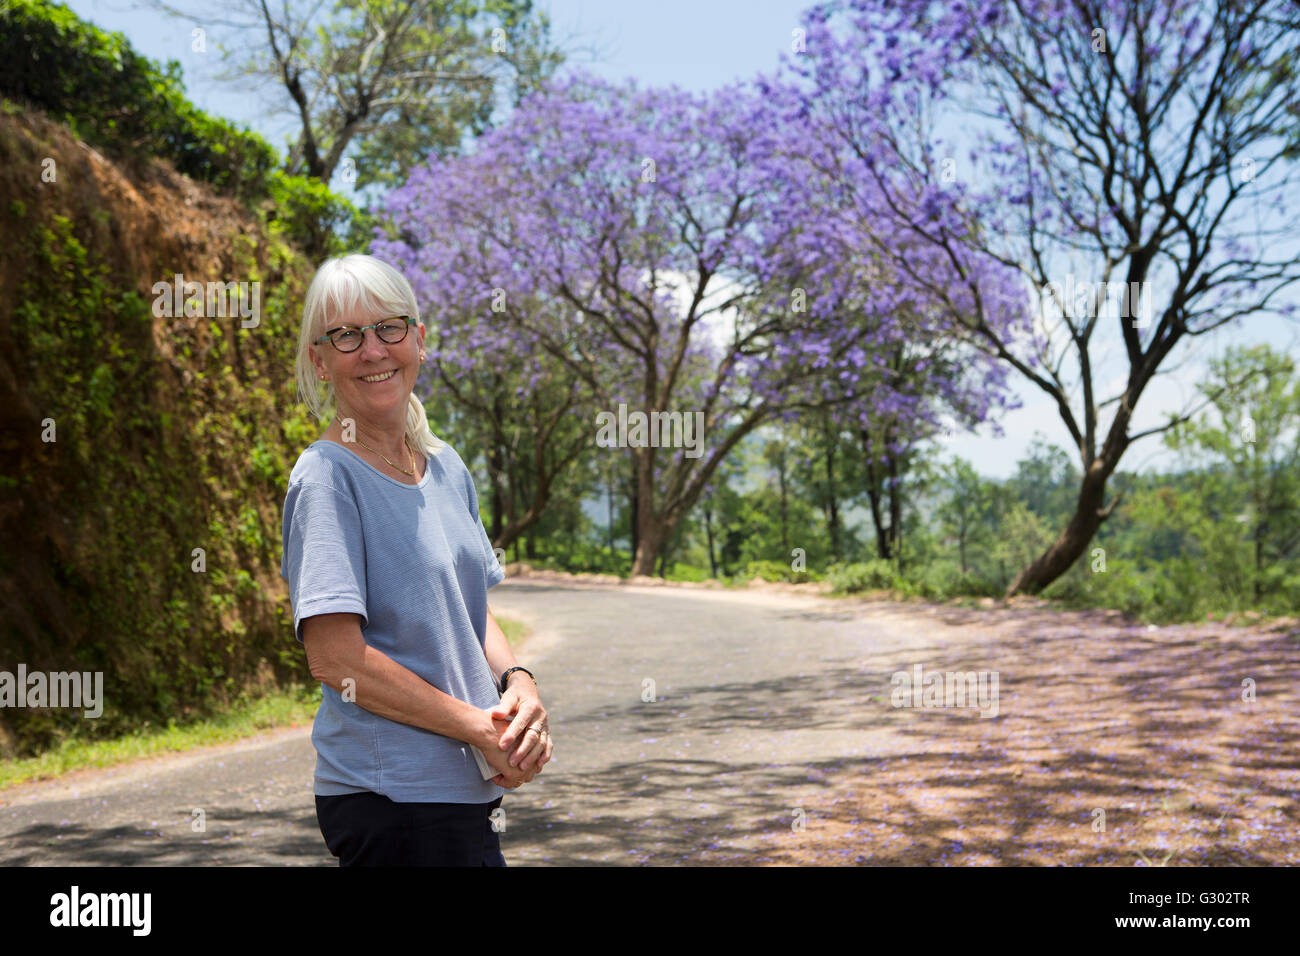 Sri Lanka, Ella, senior woman tourist on rural road under flowering Jacaranda trees Stock Photo